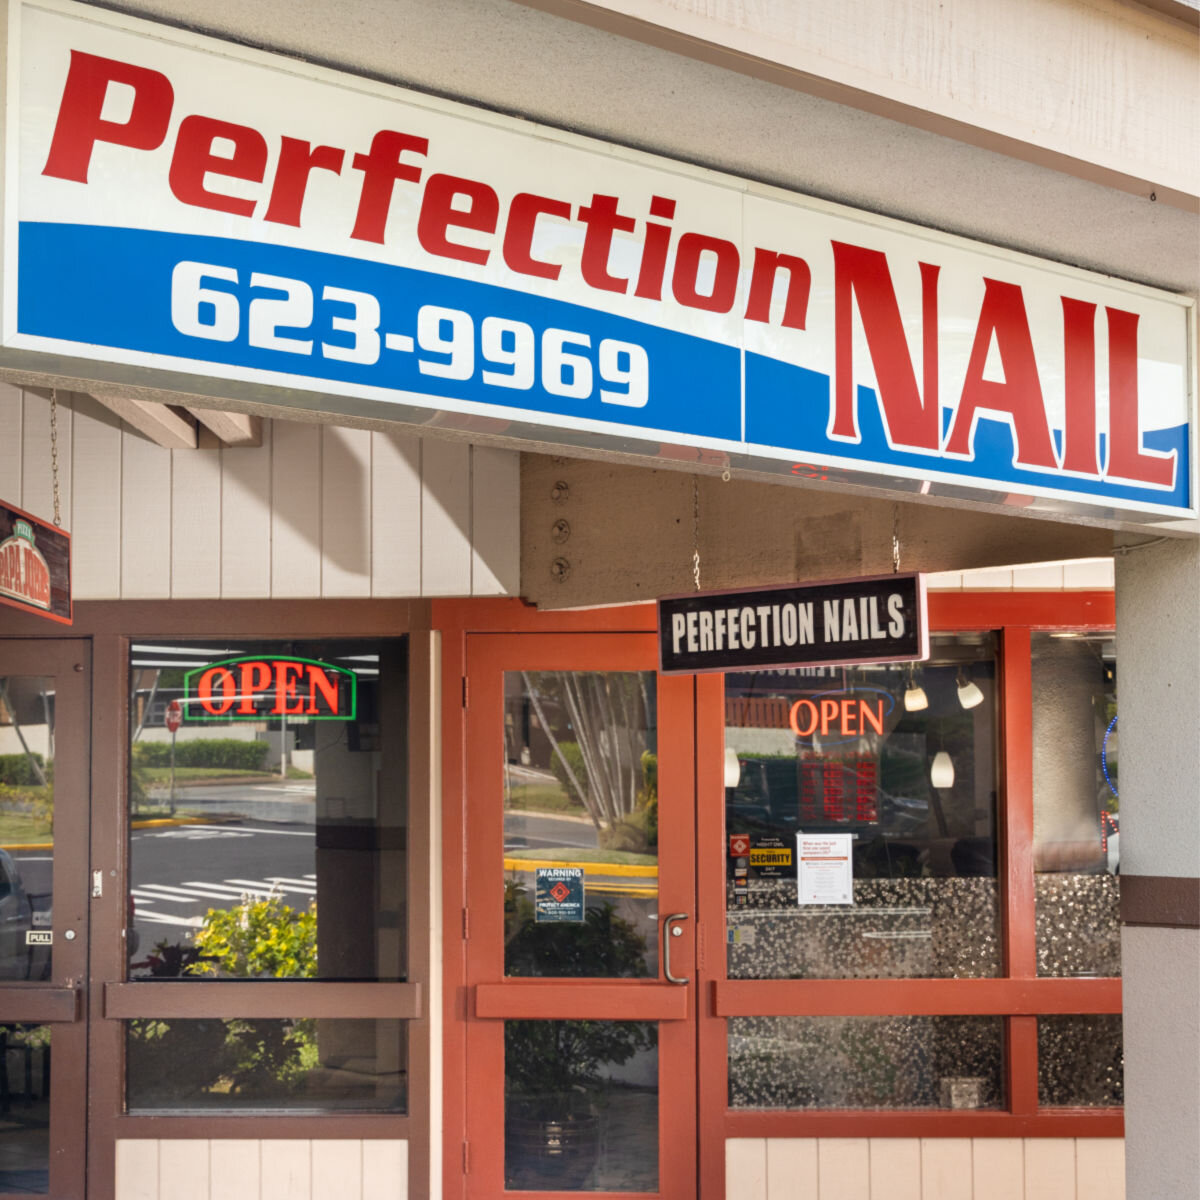 Perfection Nails exterior